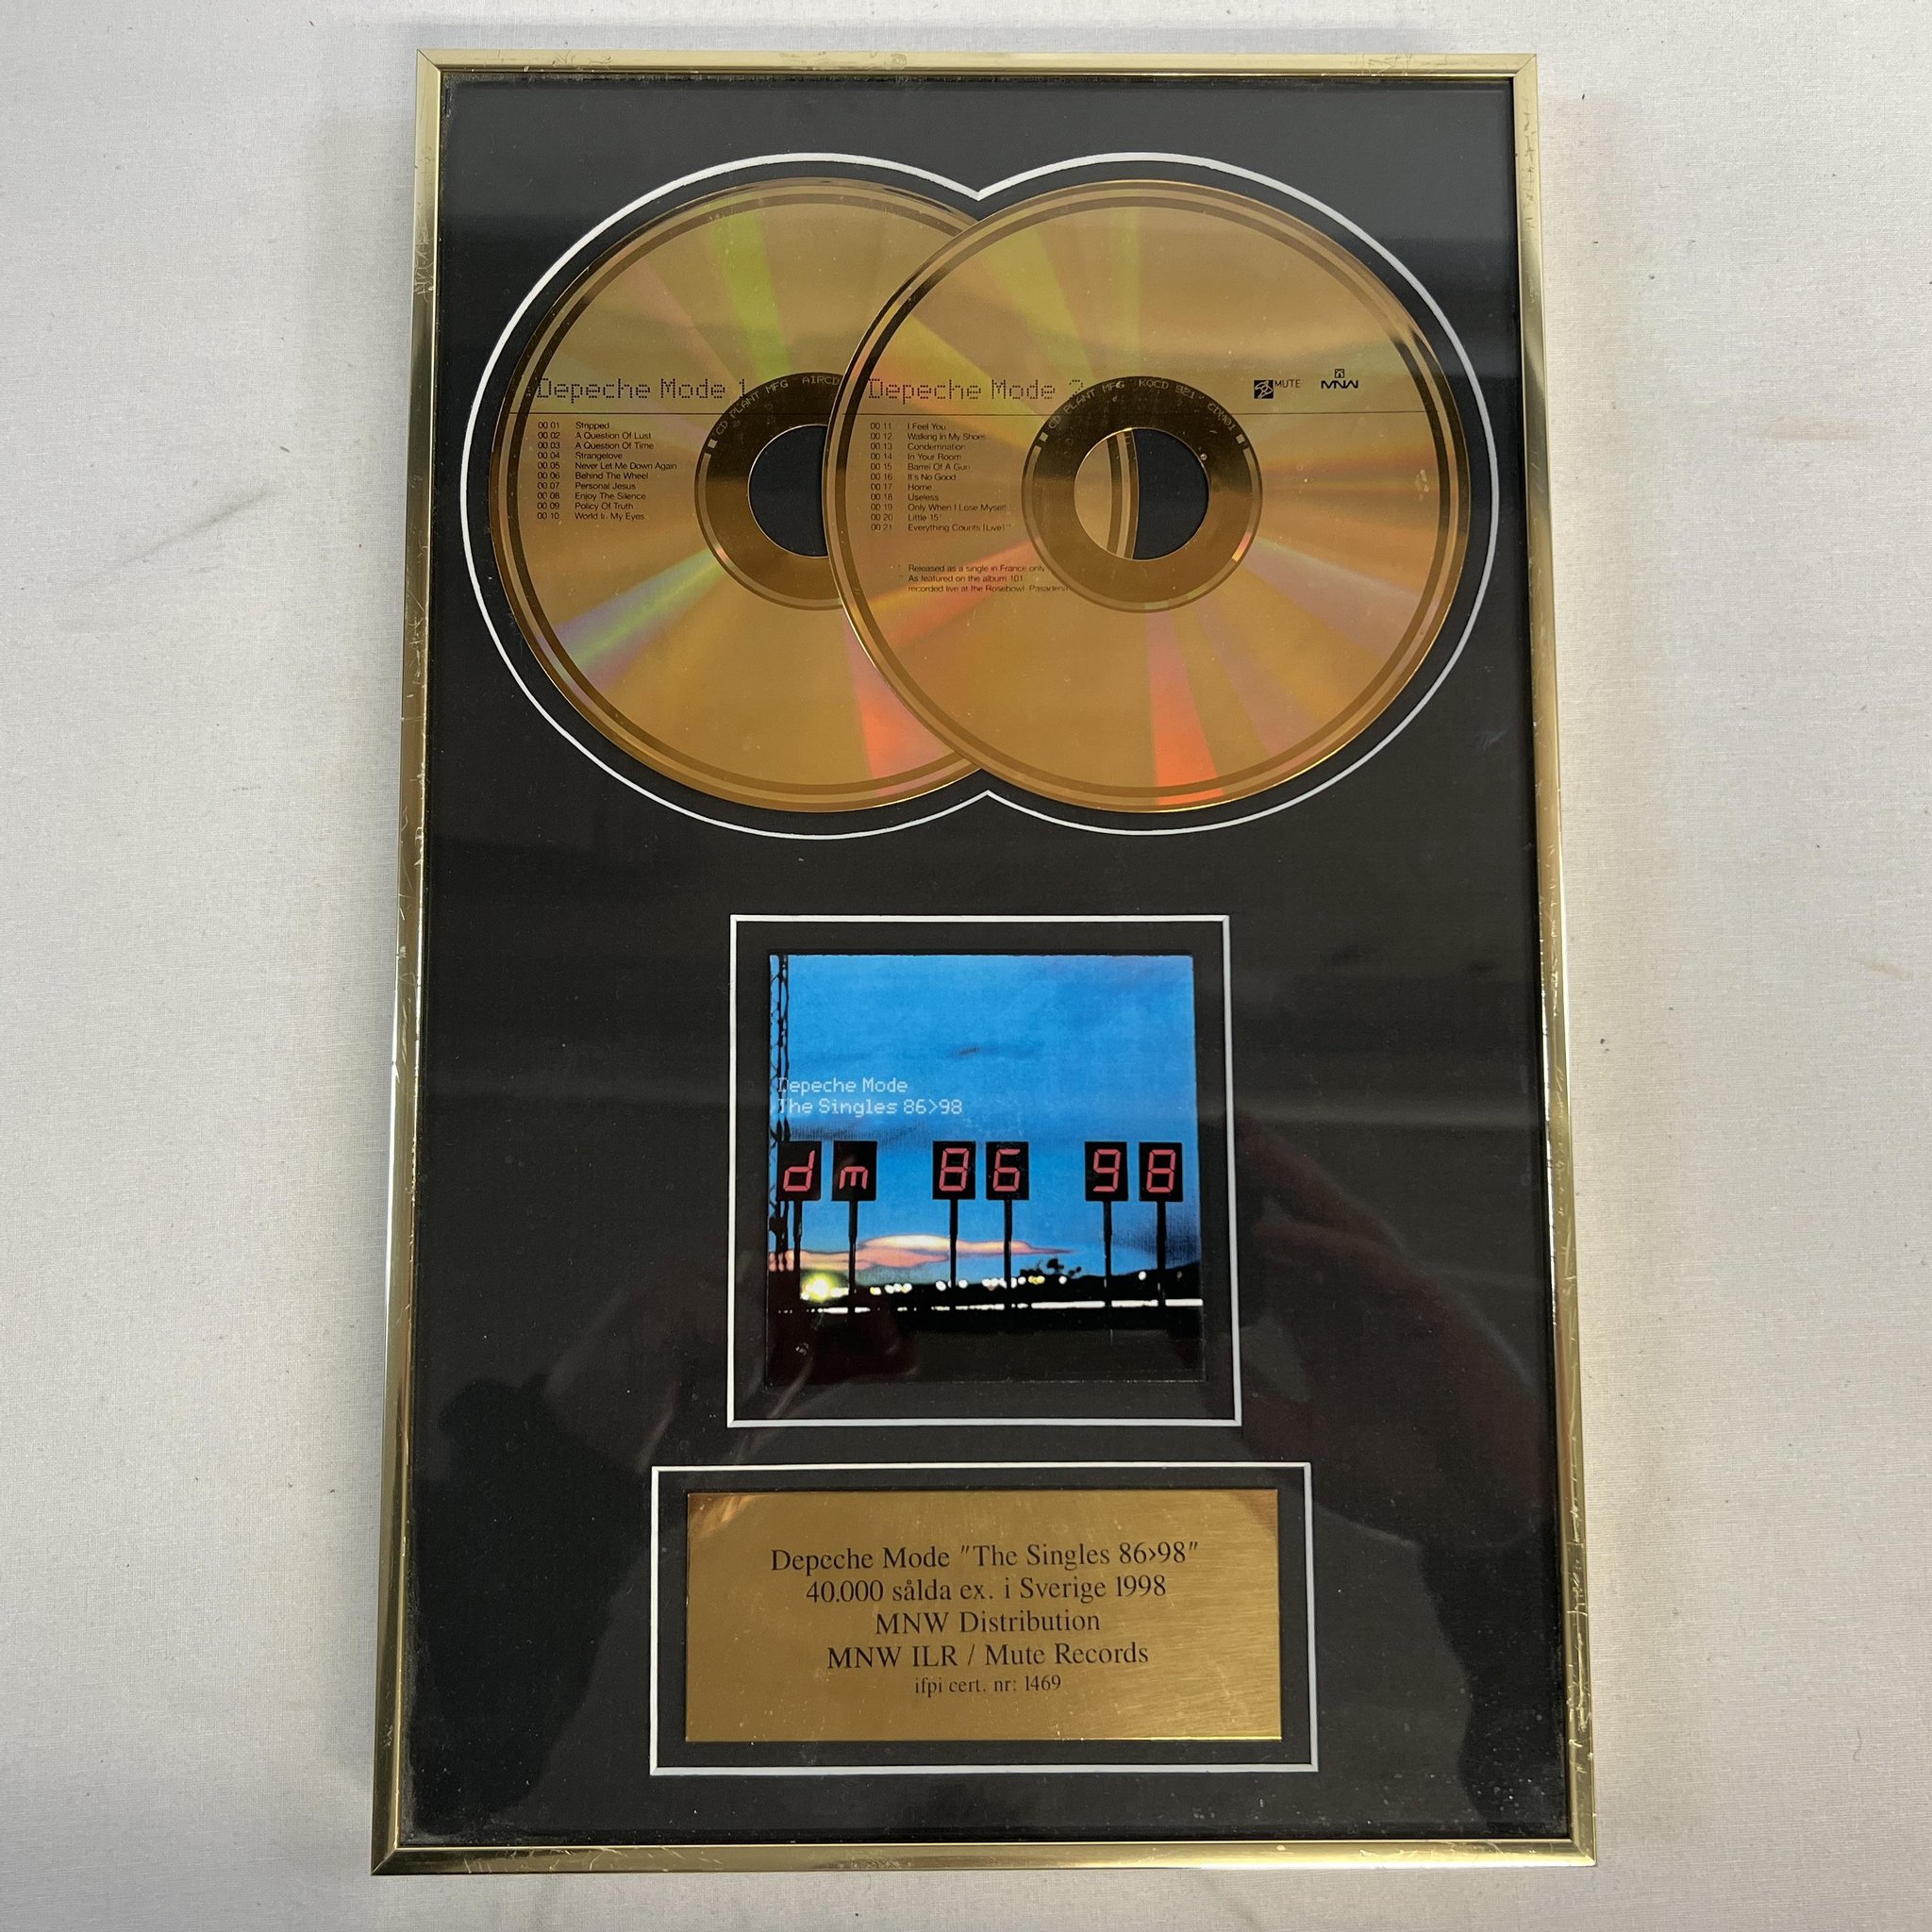 Omslagsbild för skivan DEPECHE MODE the singles 86/98 2xCD Golden Disc ***** MEGA RARE *****